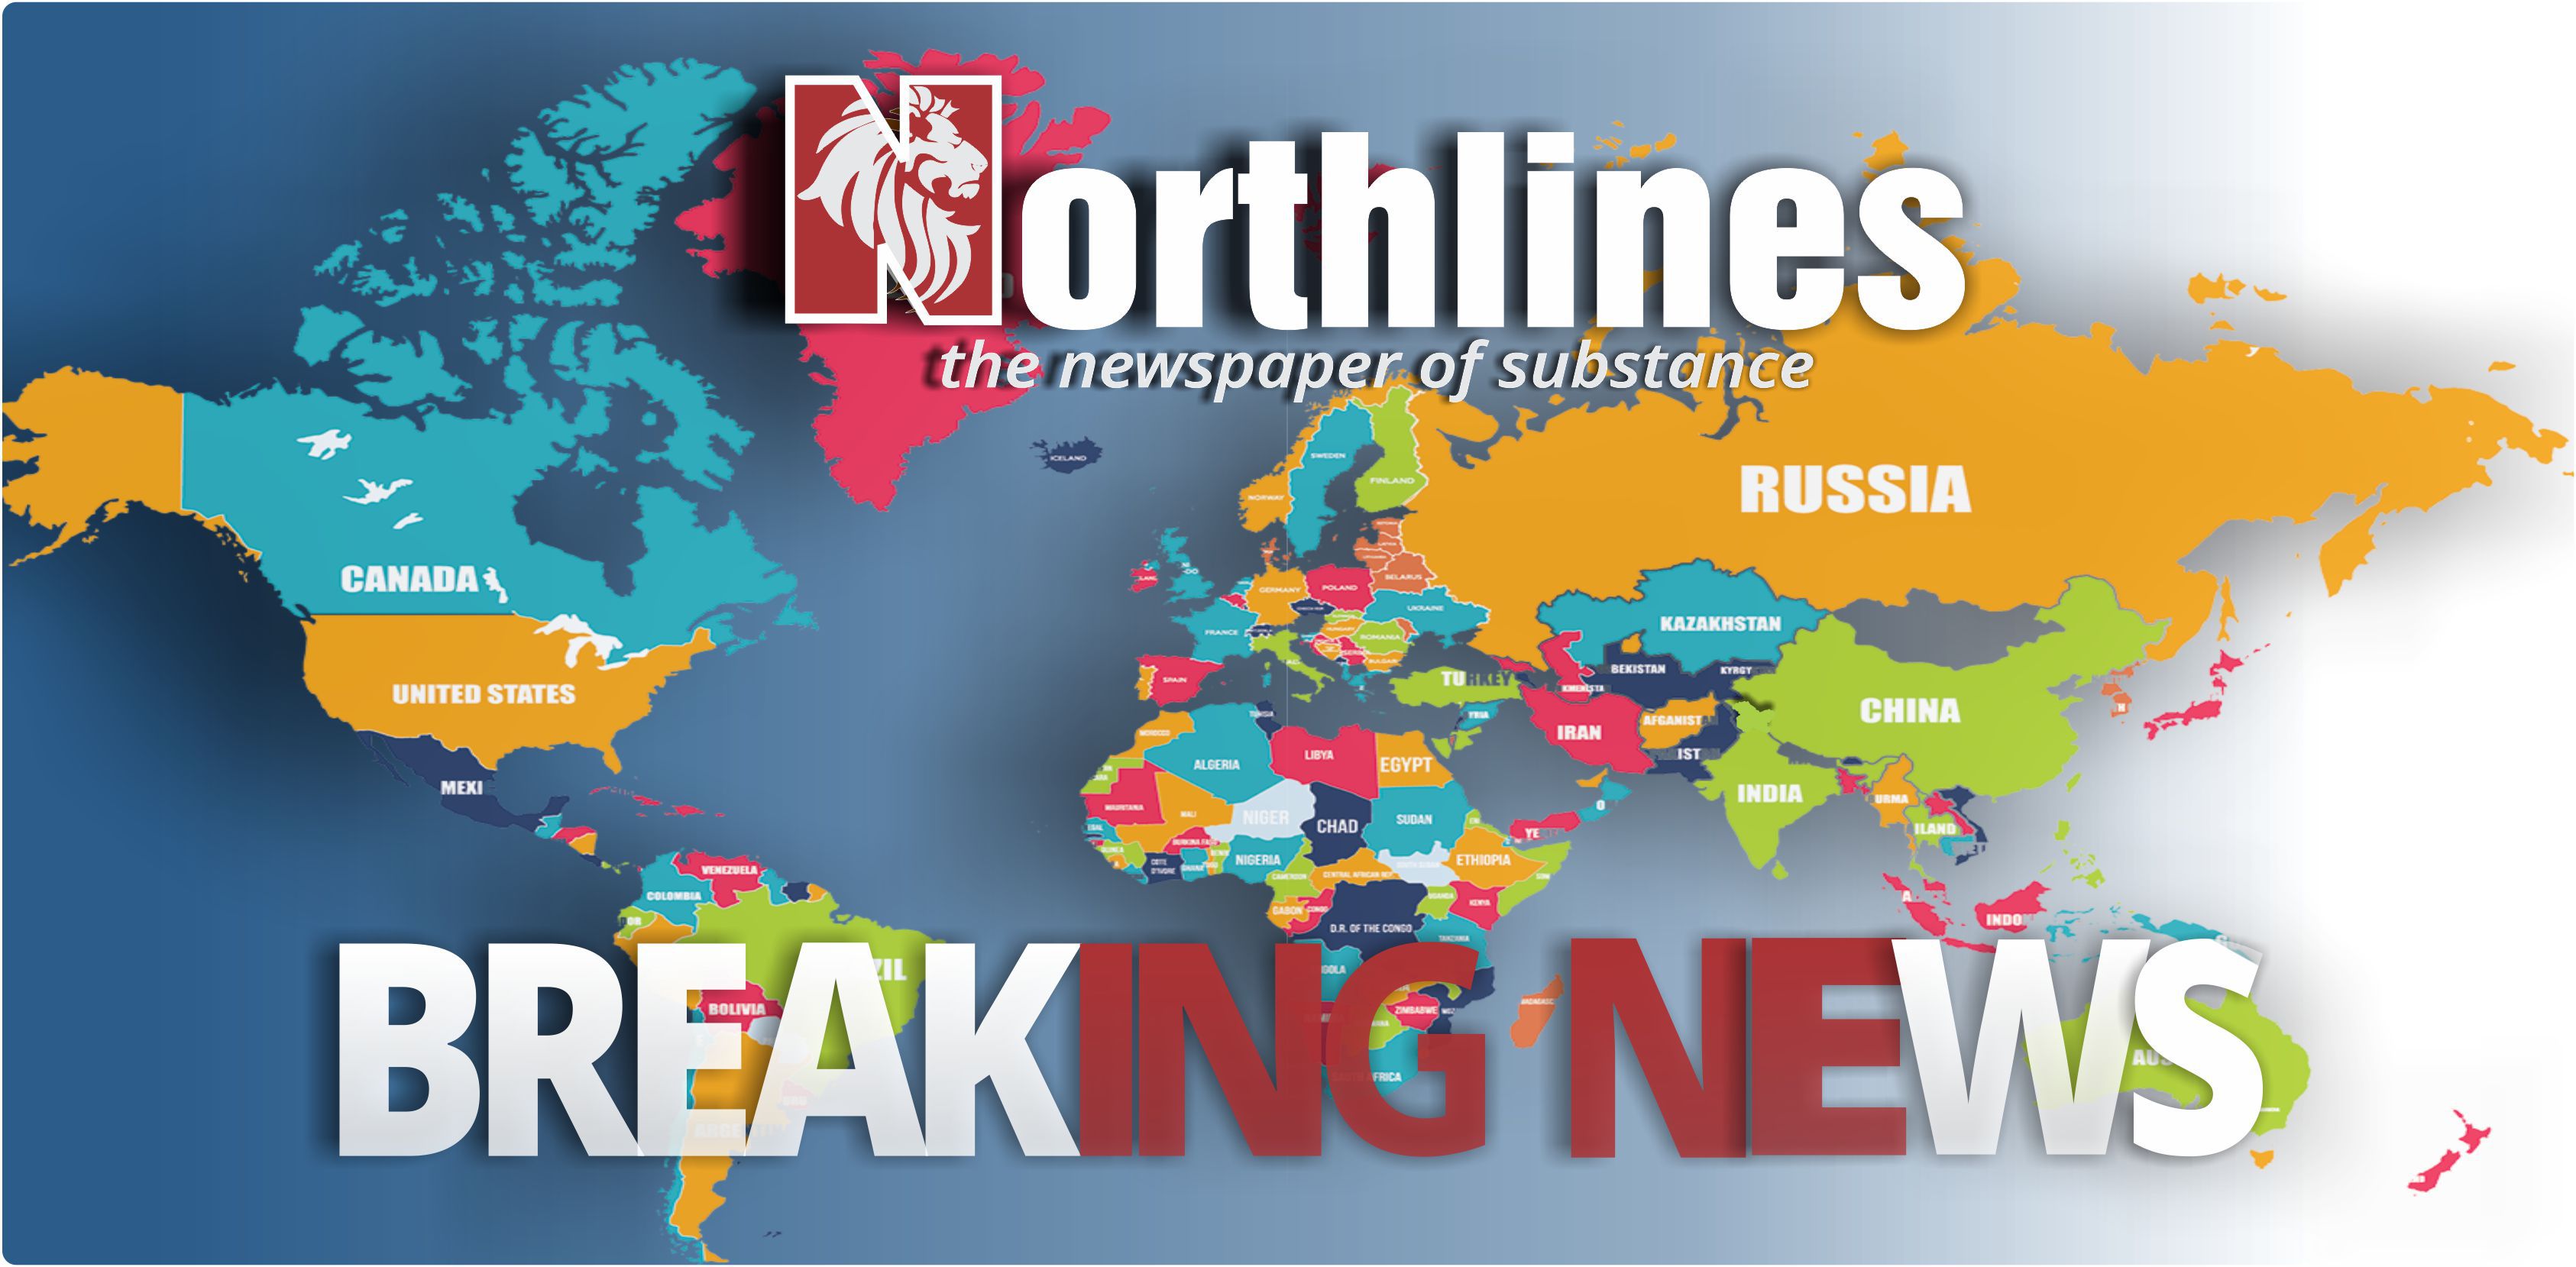 http://www.thenorthlines.com/wp-content/uploads/2016/06/Northlines-breaking-news-draft.jpg